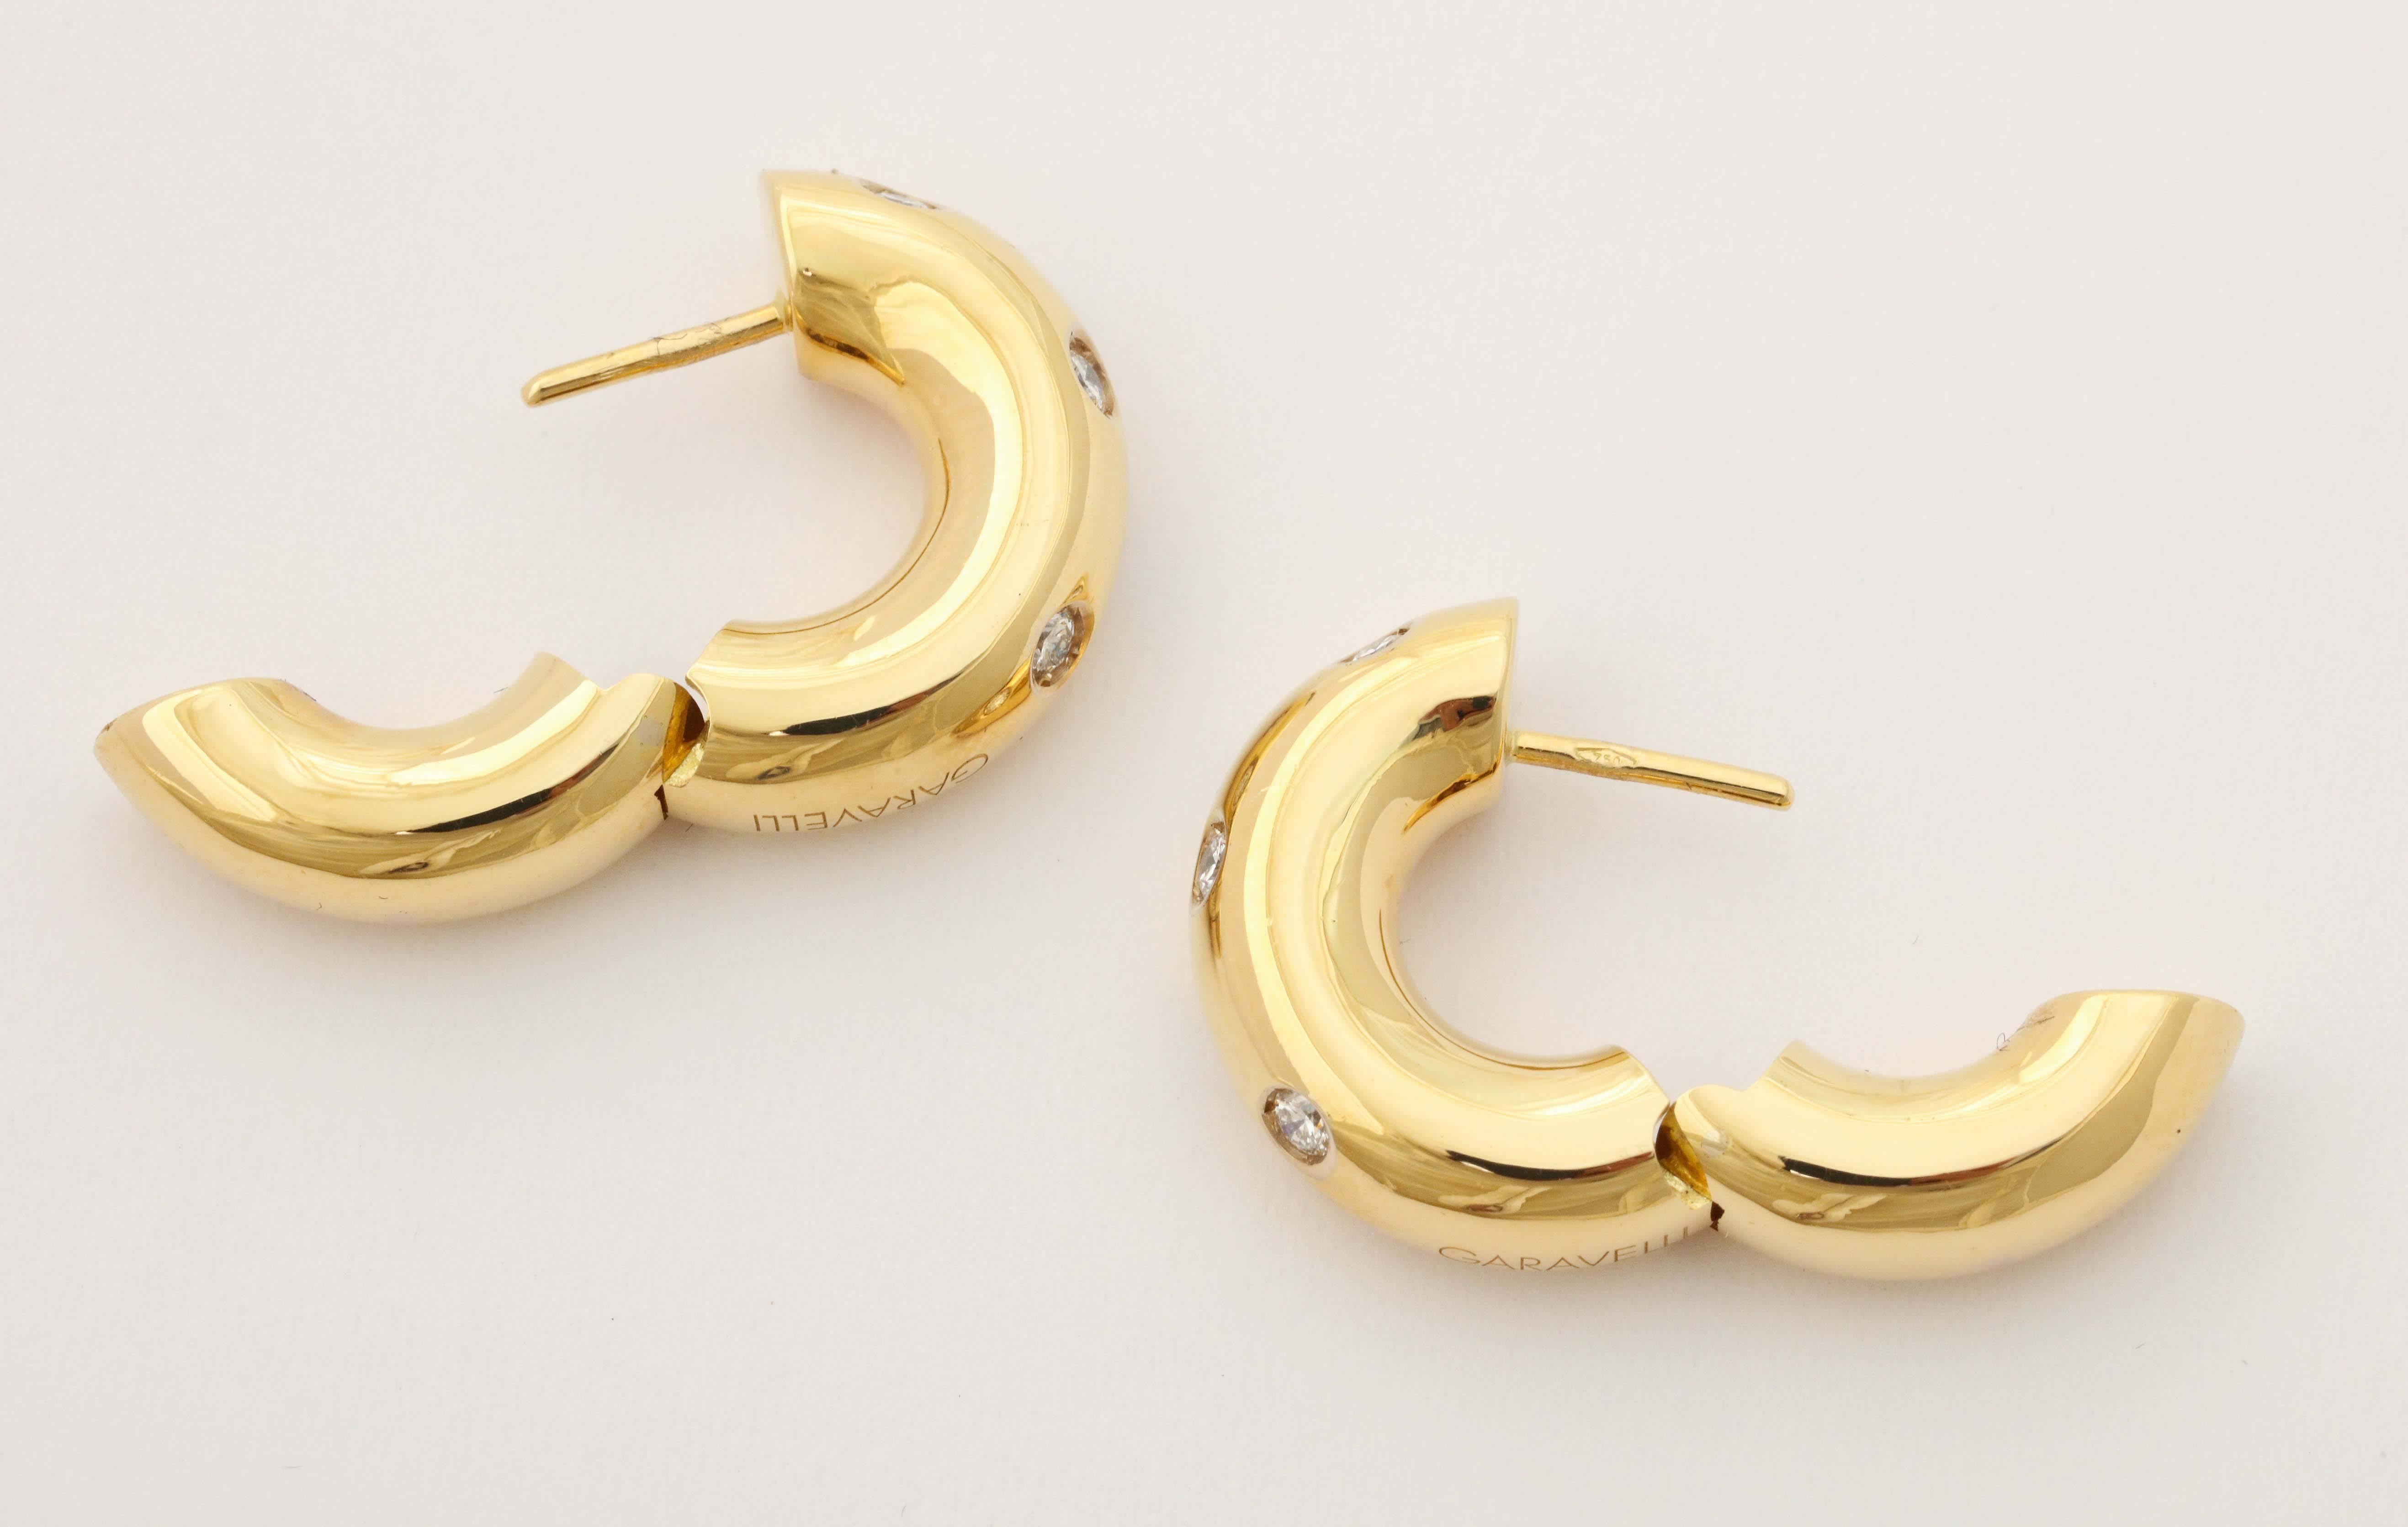 18k yellow gold burnished diamond hoop earrings. 

10 Full cut diamonds - 0.40 total weight

